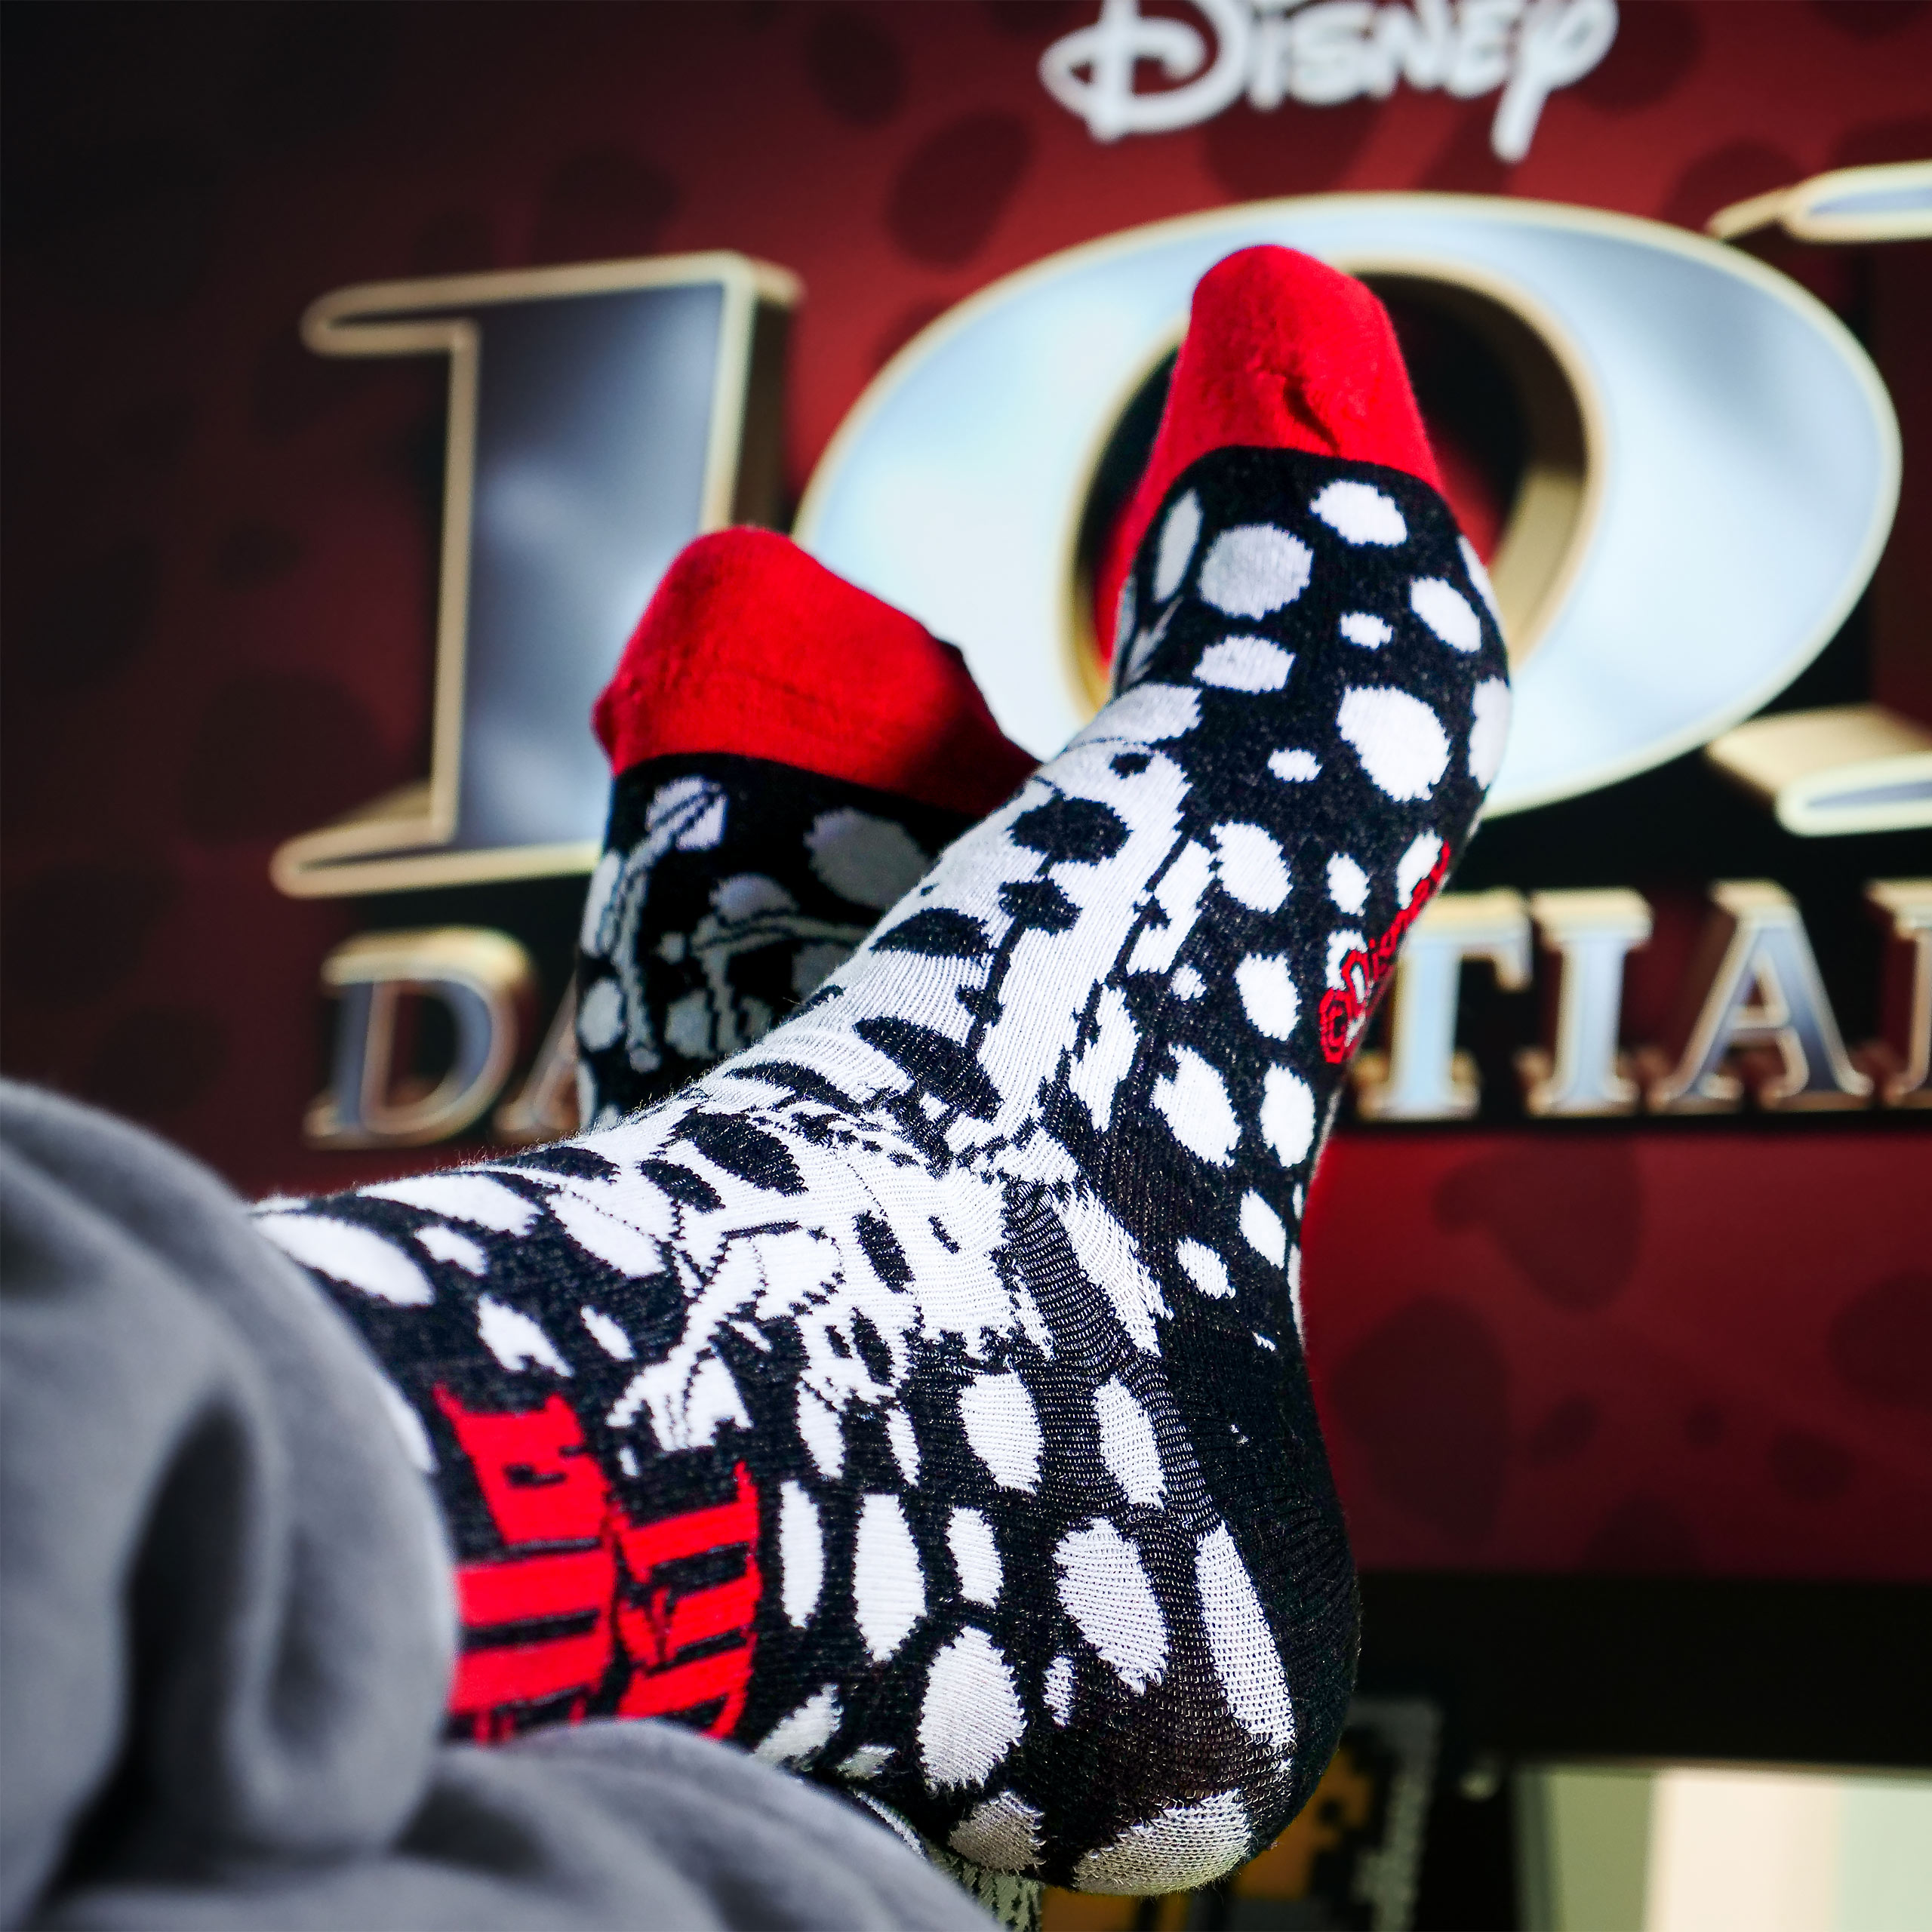 Disney Villains Socks 5-piece Set